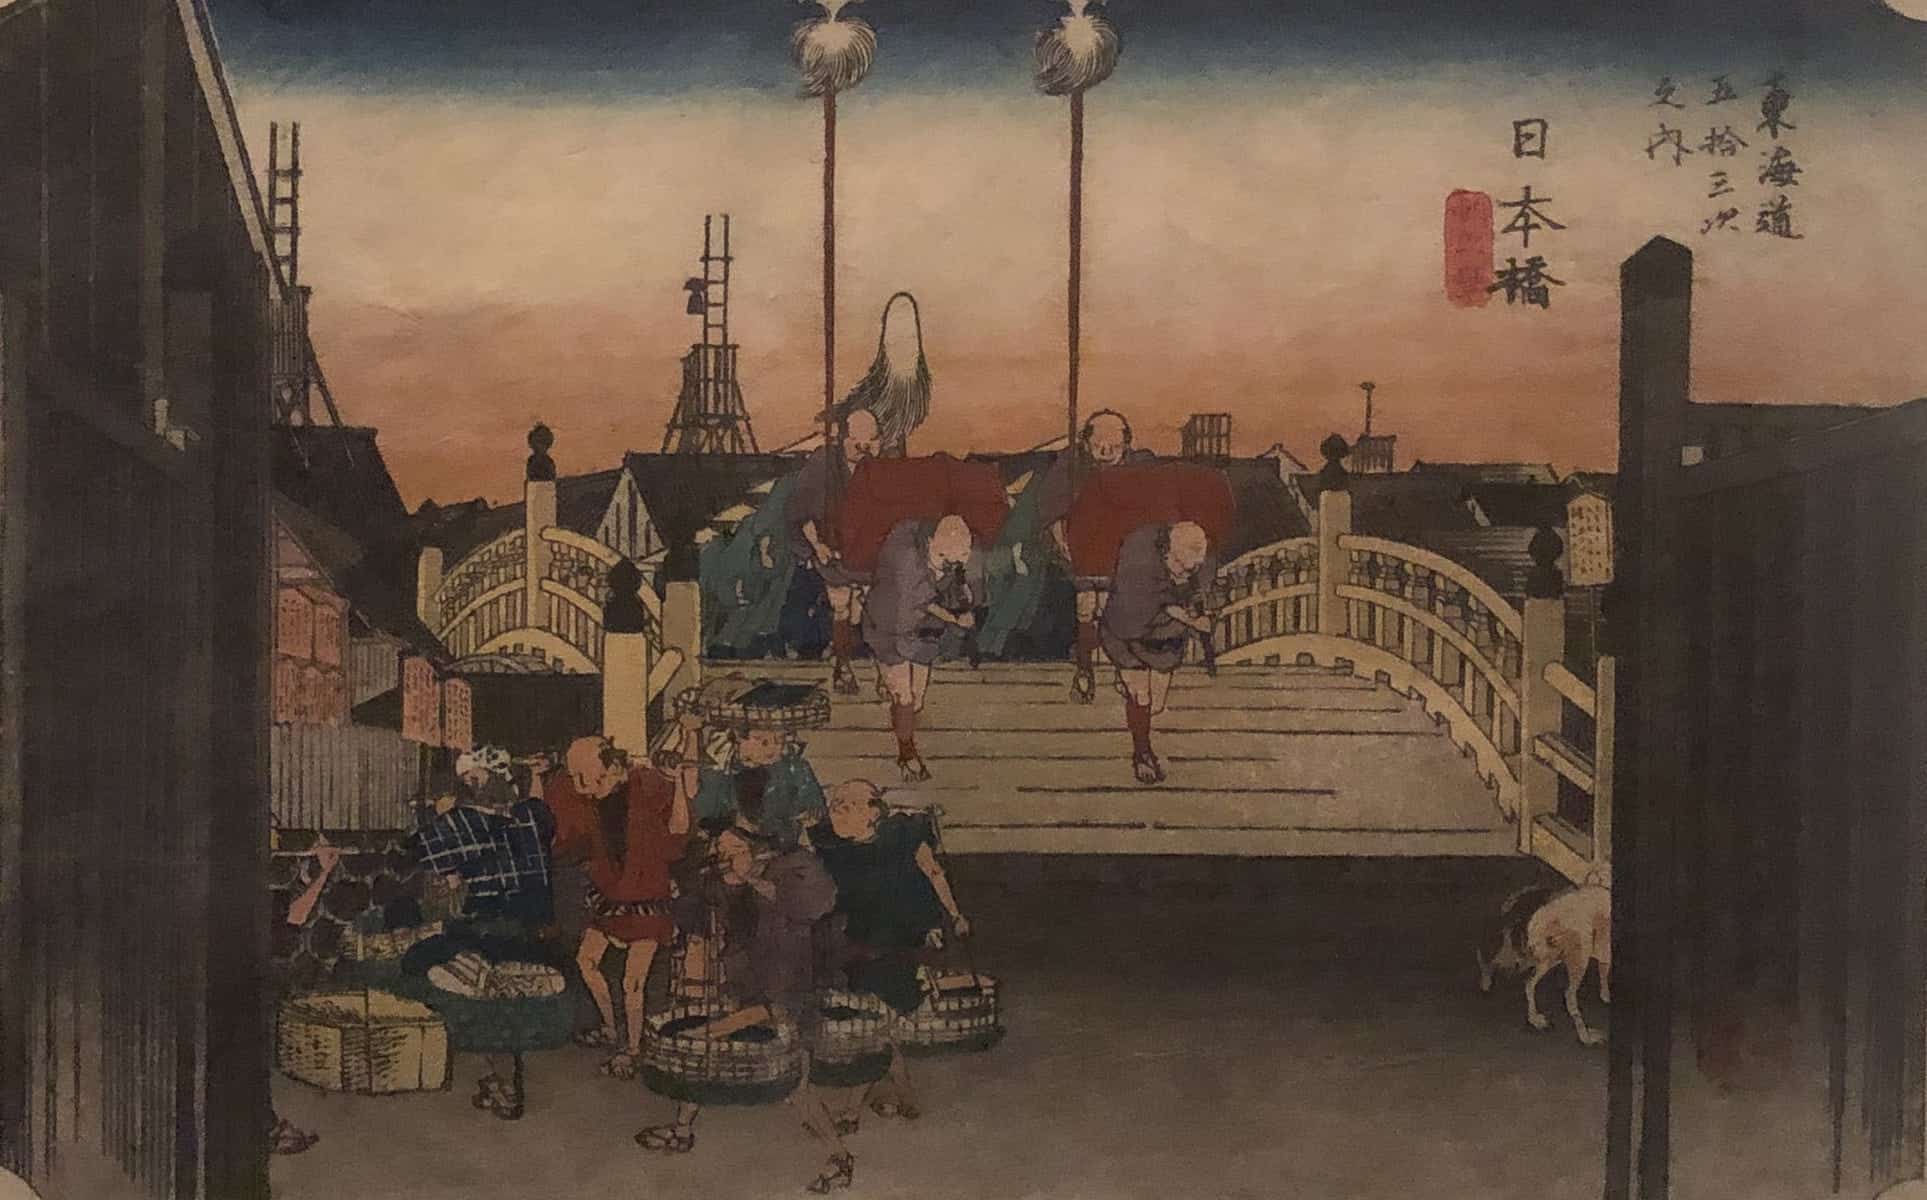 Nihonbashi: Morning scene (1833) by Utagawa Hiroshige